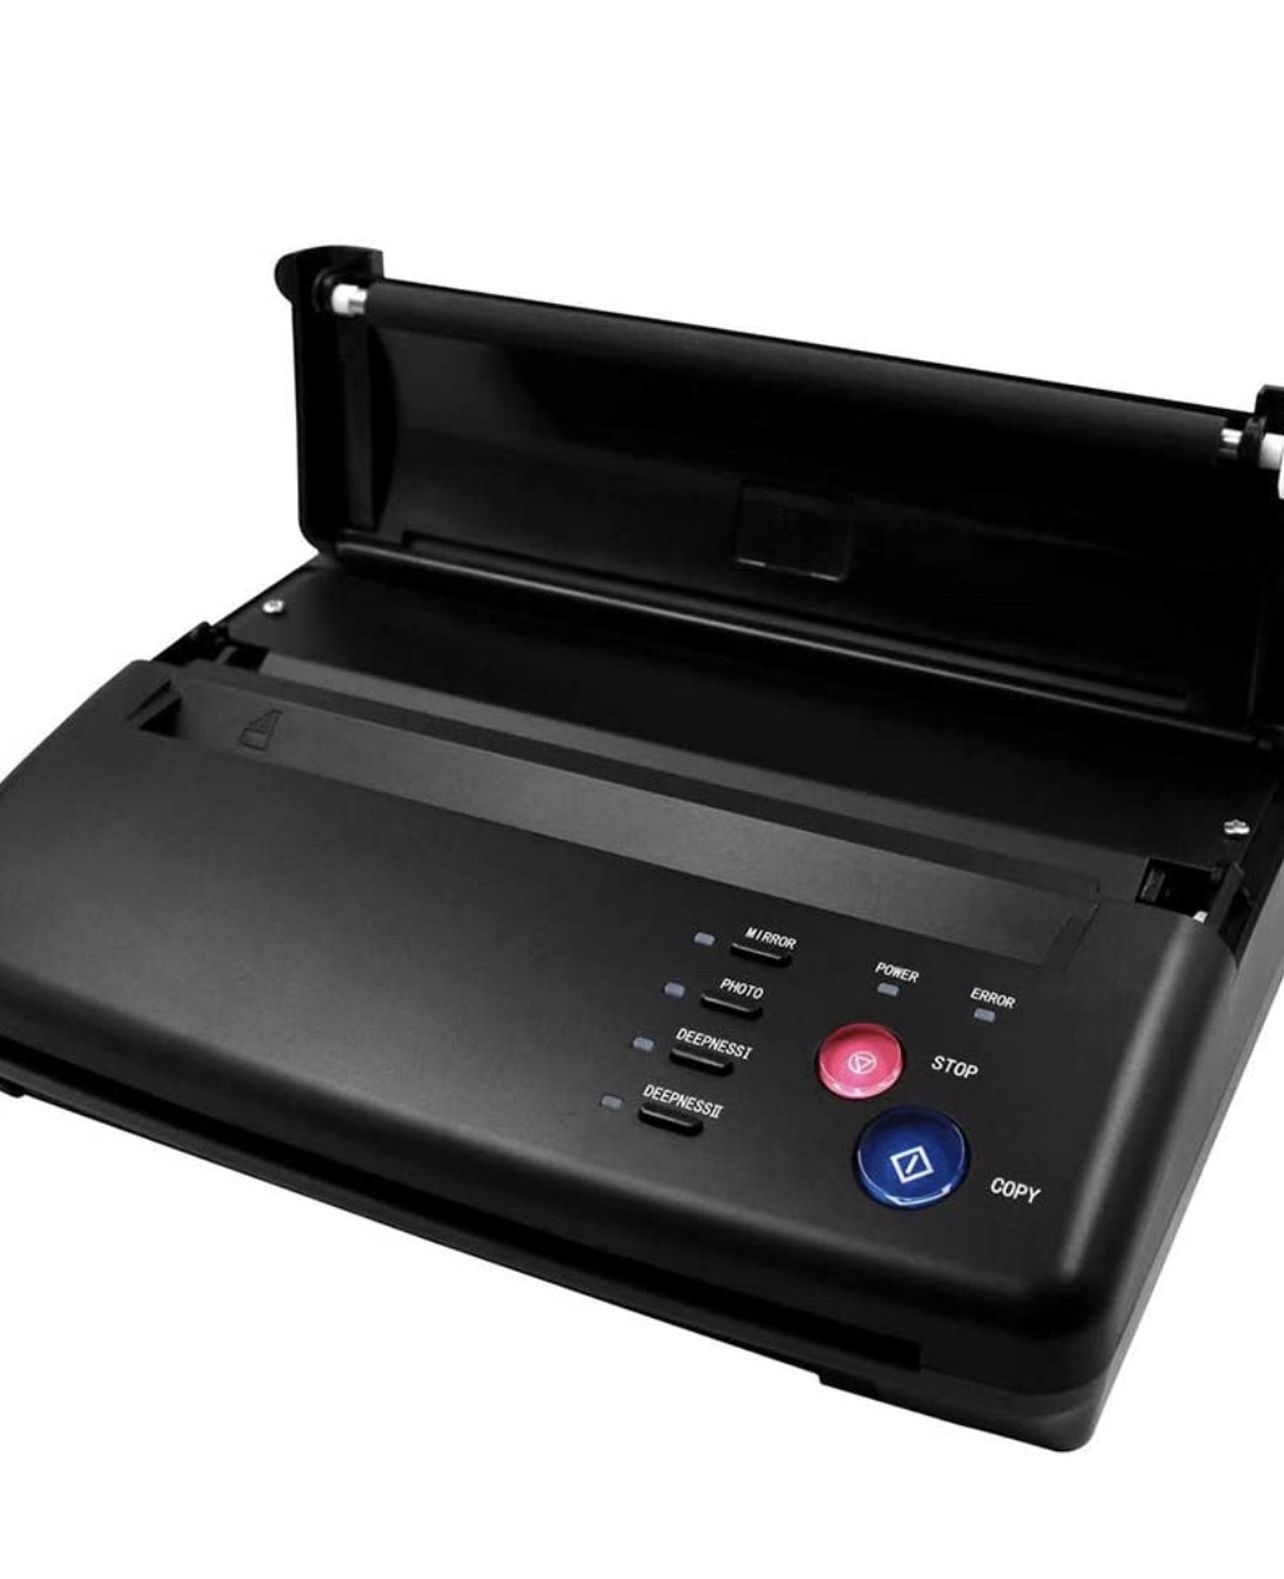 Pro Black Tattoo Transfer Copier Printer Machine Thermal Stencil Paper Maker